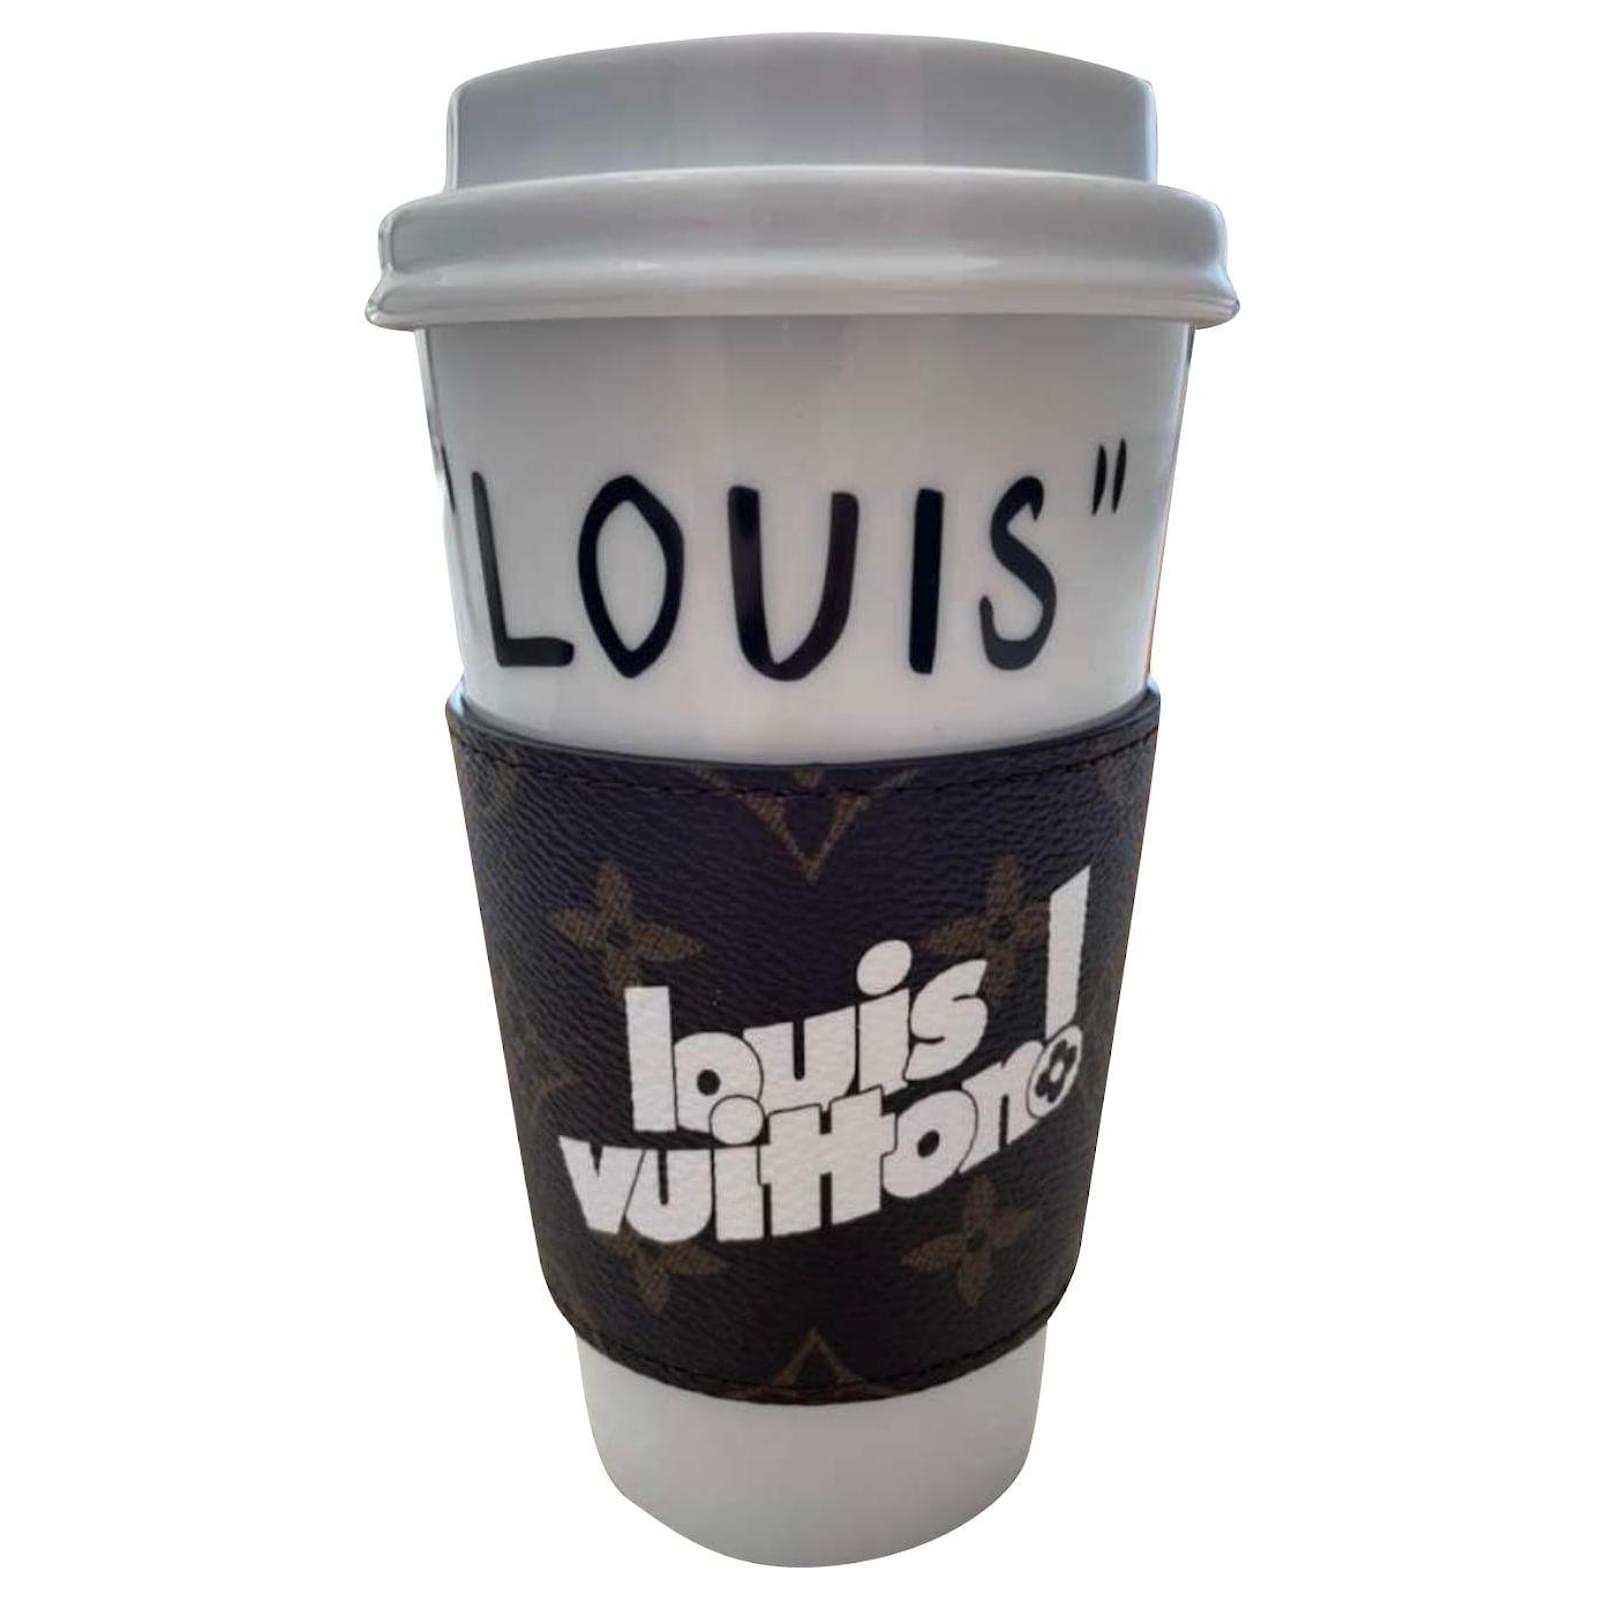 ✨NEW ARRIVAL✨ LOUIS VUITTON MONOGRAM COFFEE CUP BAG $3,500.00